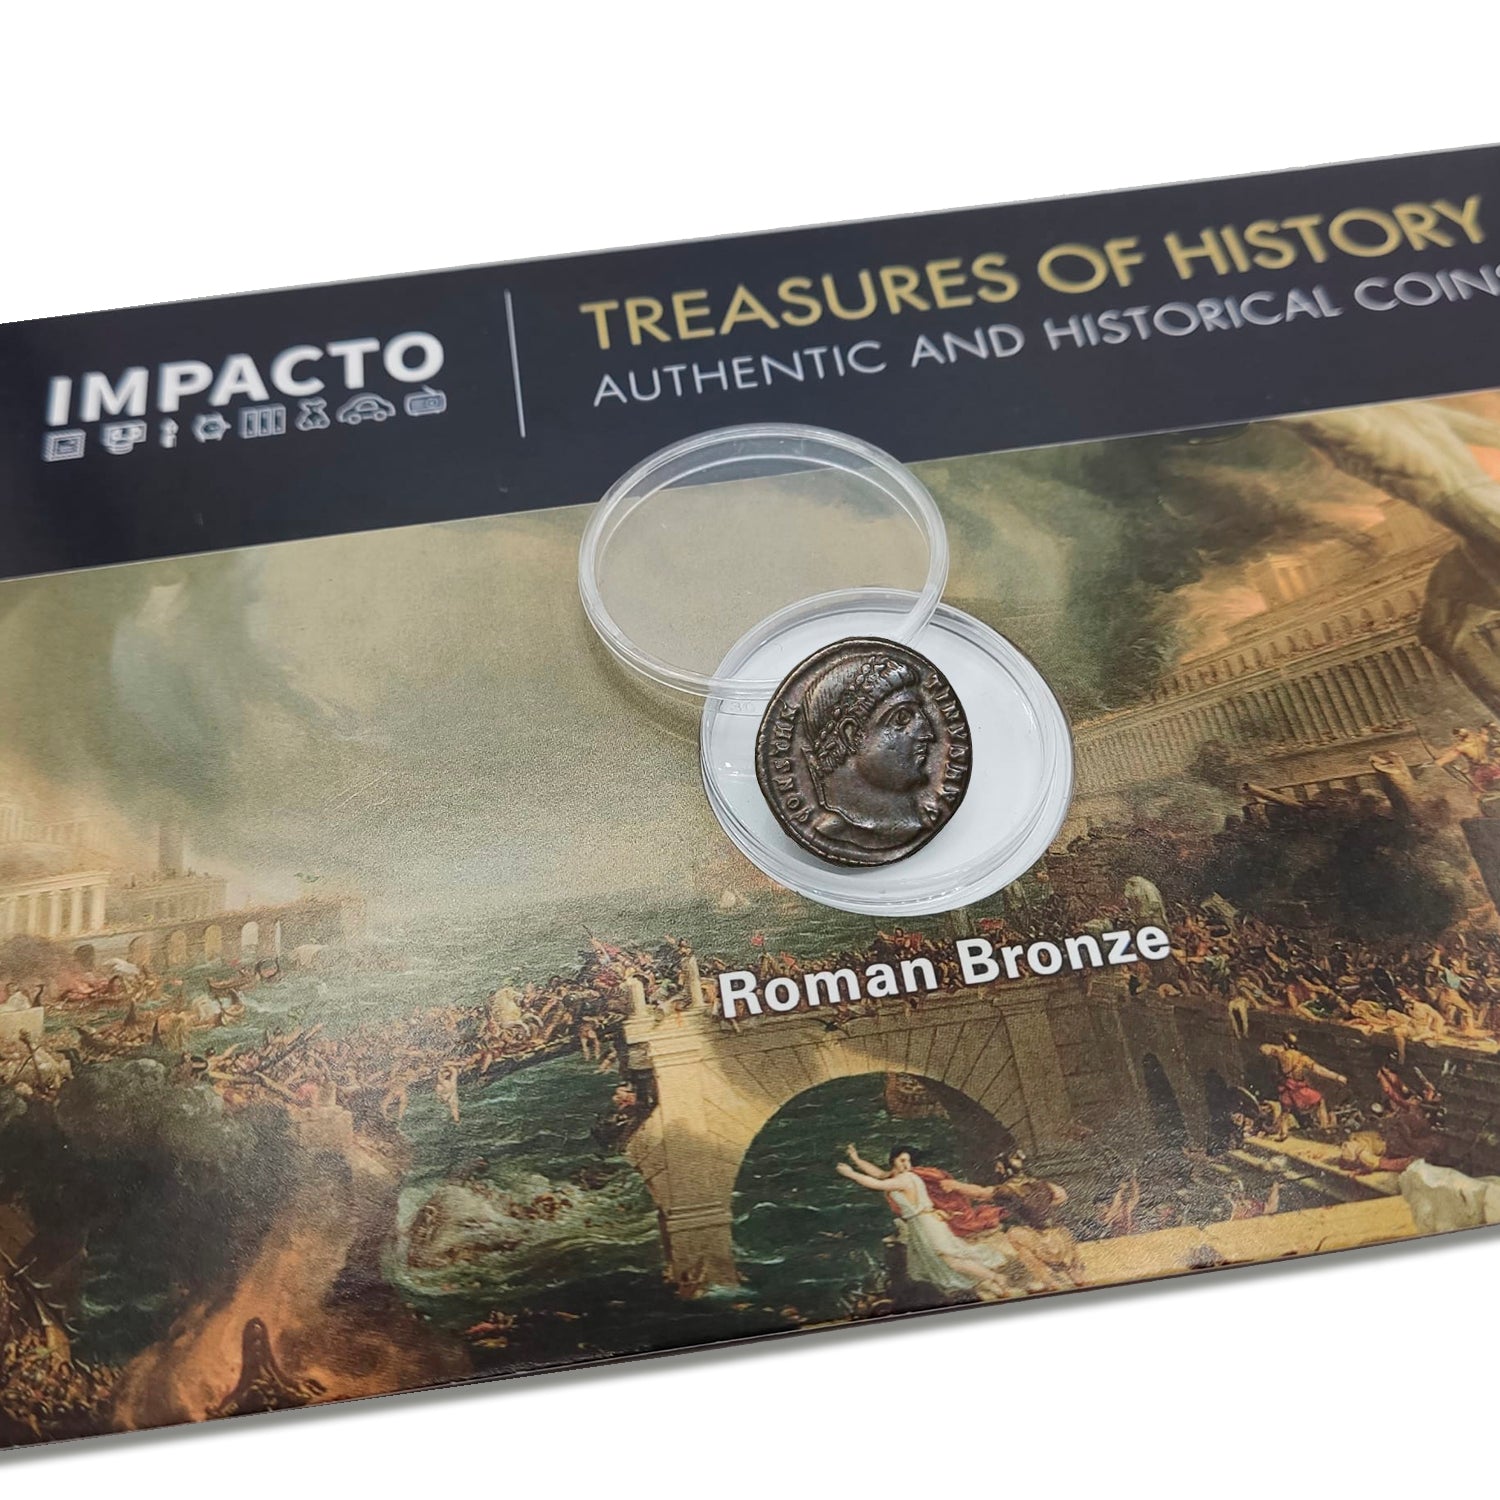 Rare Ancient Roman Coins For Sale - IMPACTO - impacto.com